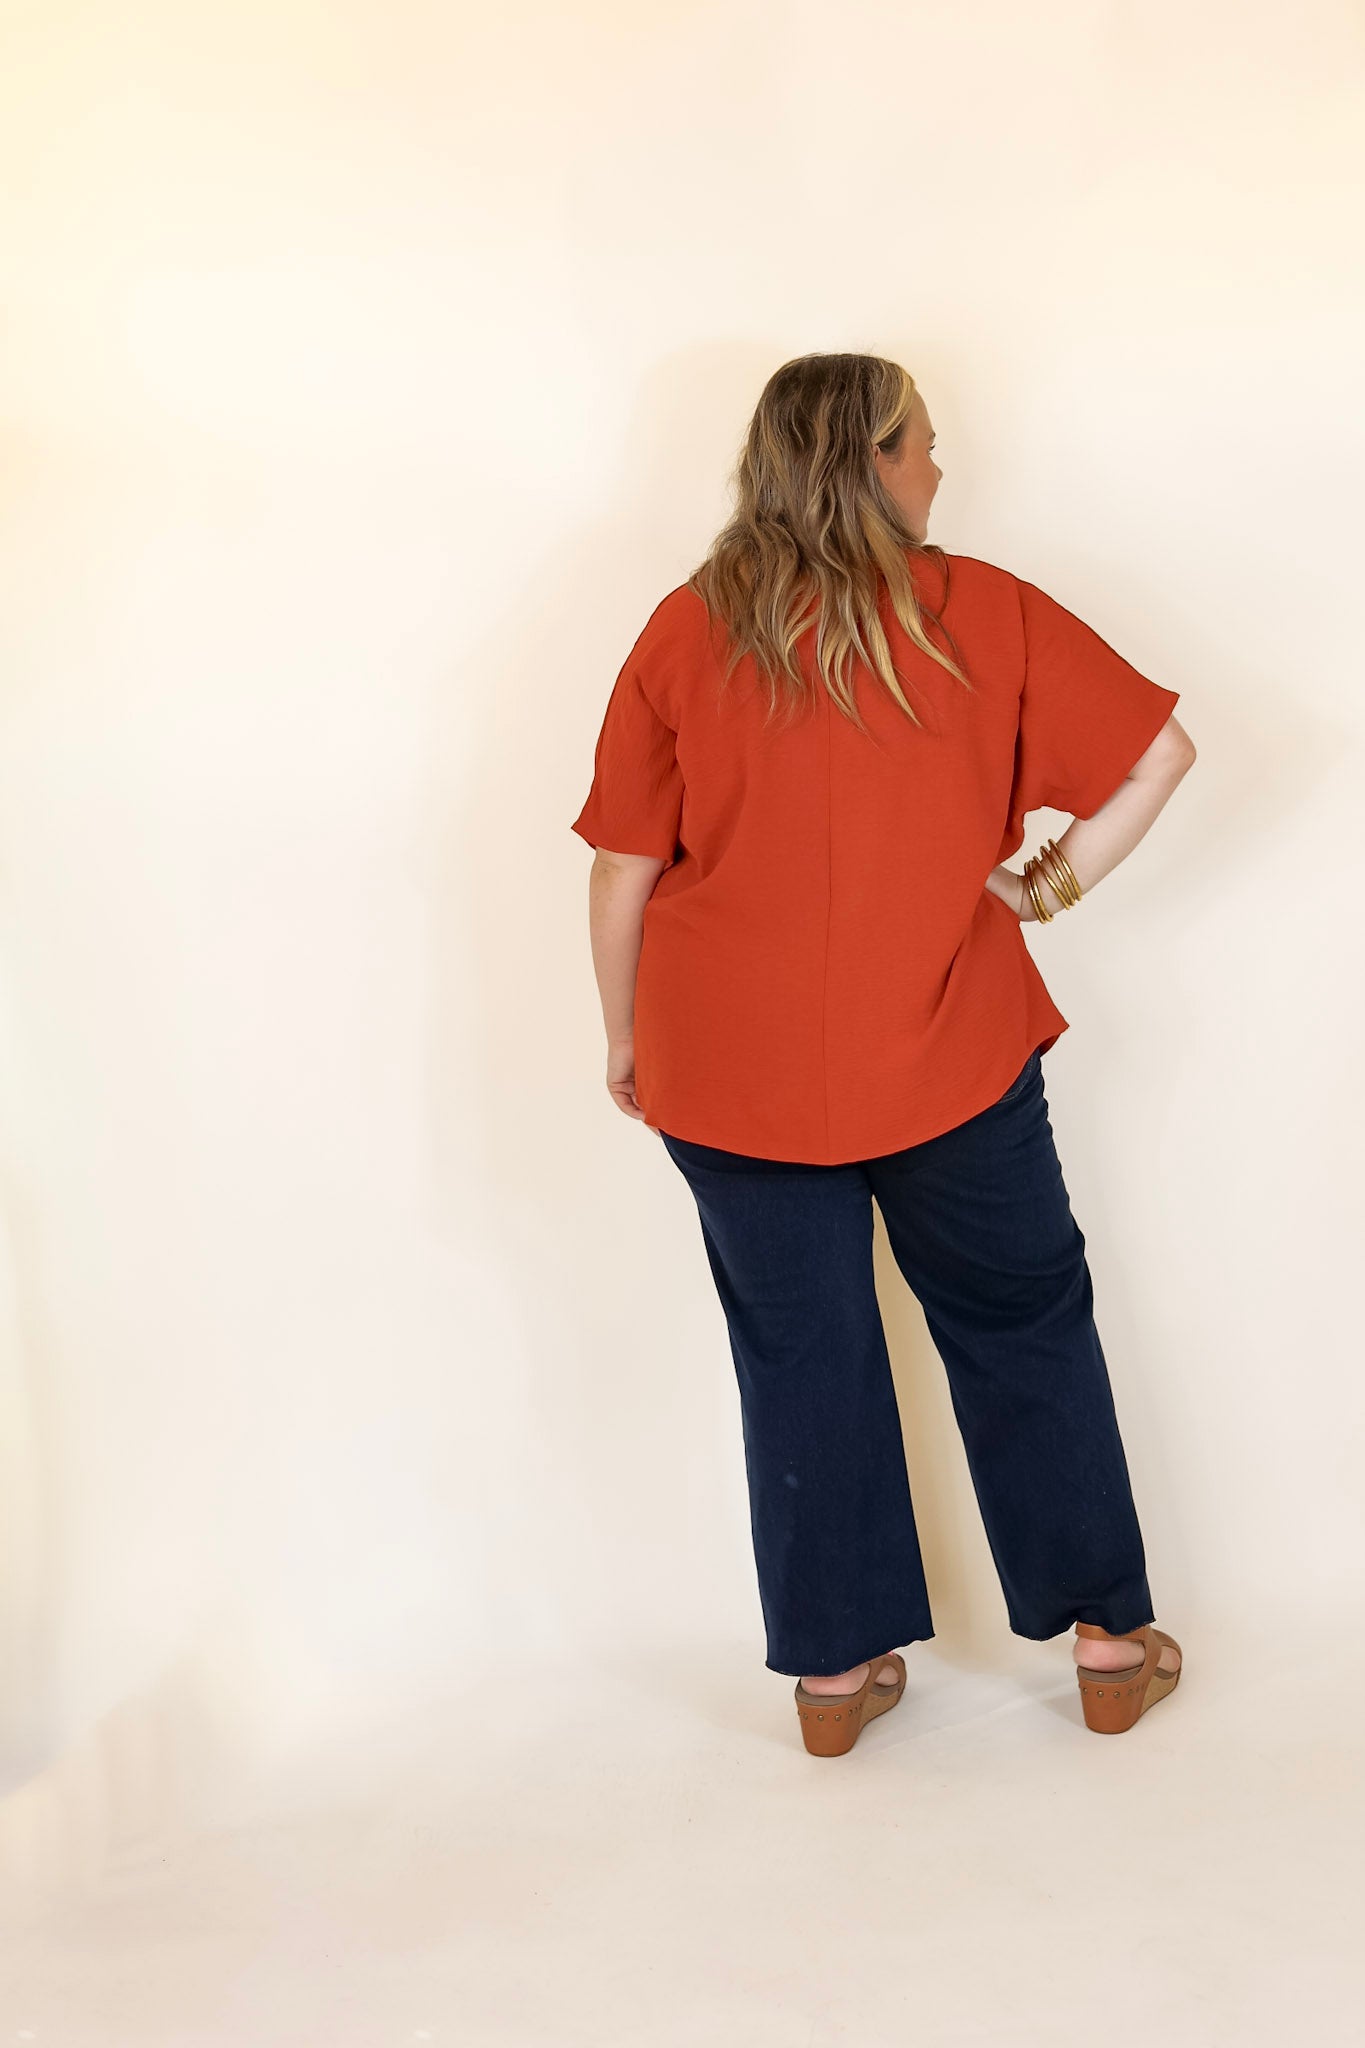 Lovely Dear V Neck Short Sleeve Solid Top in Rust Orange - Giddy Up Glamour Boutique